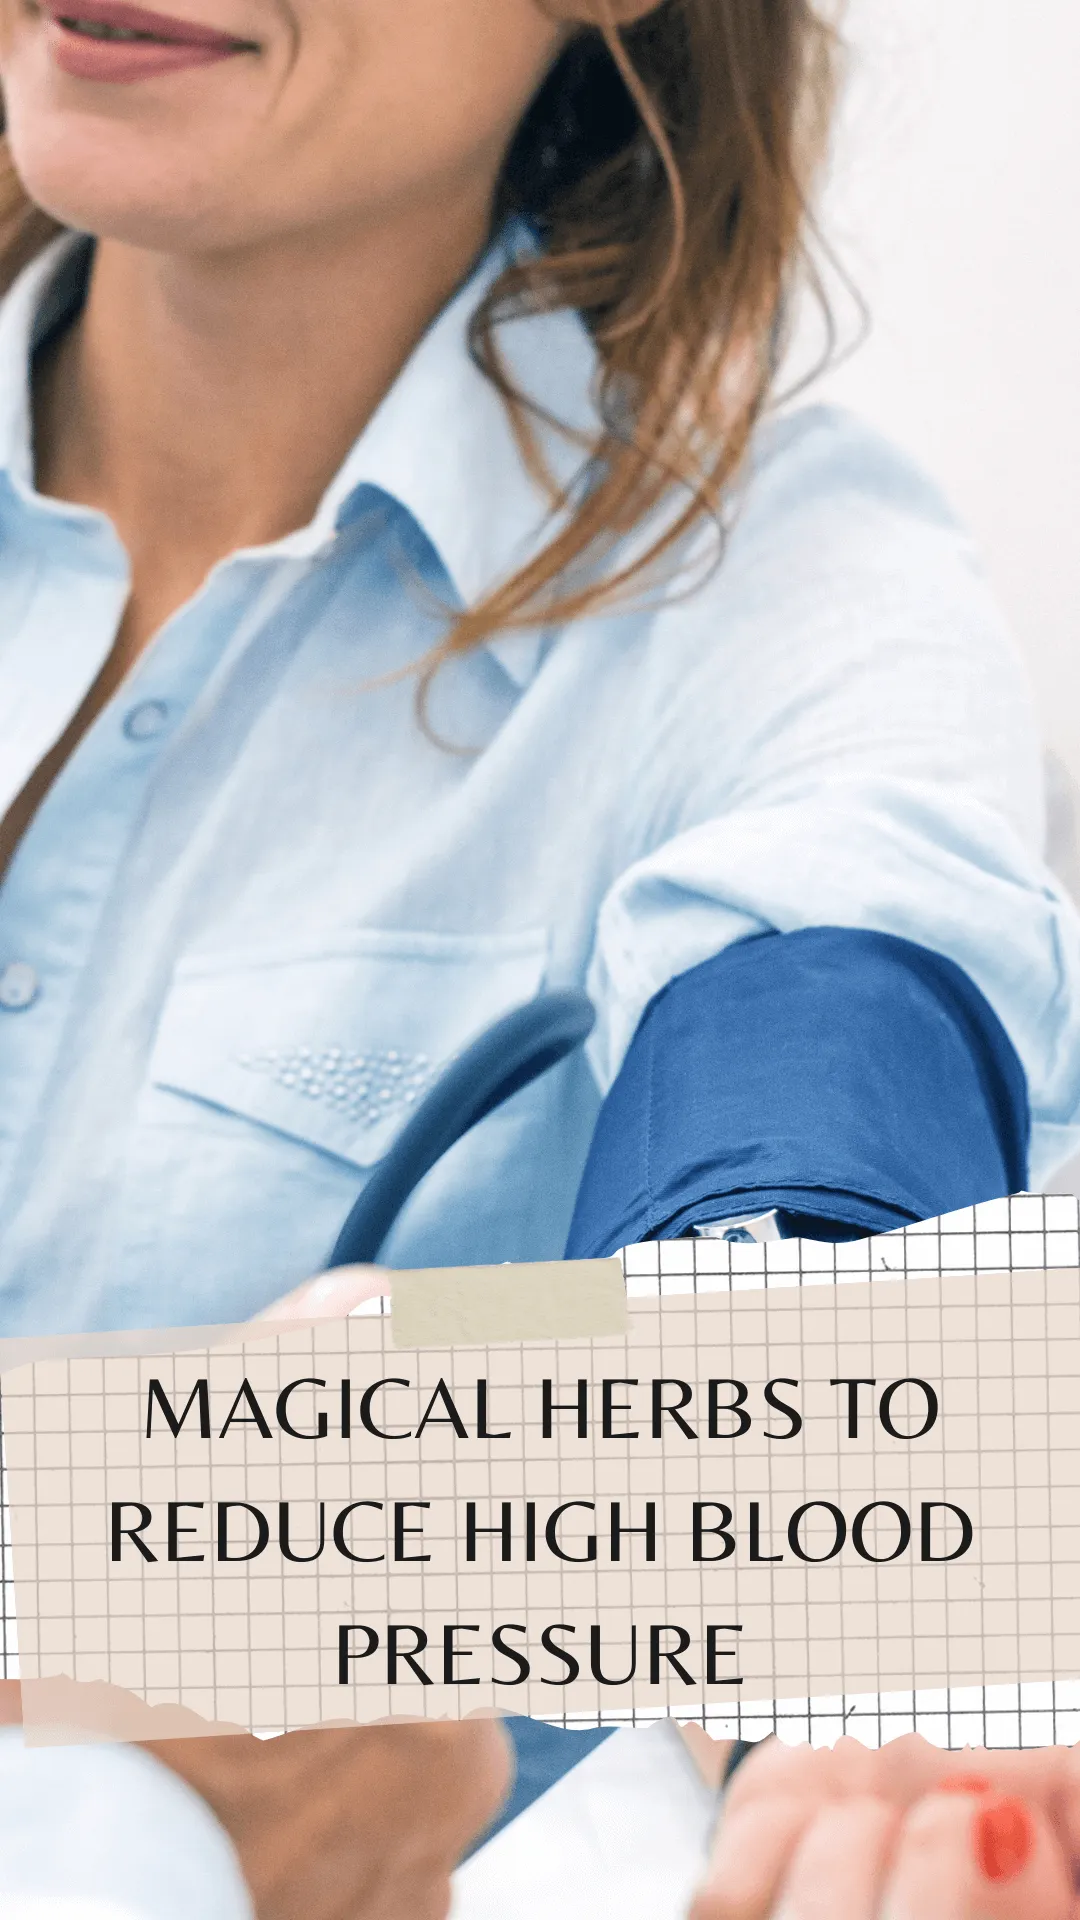 Magical Herbs to reduce HIGH BLOOD PRESSURE